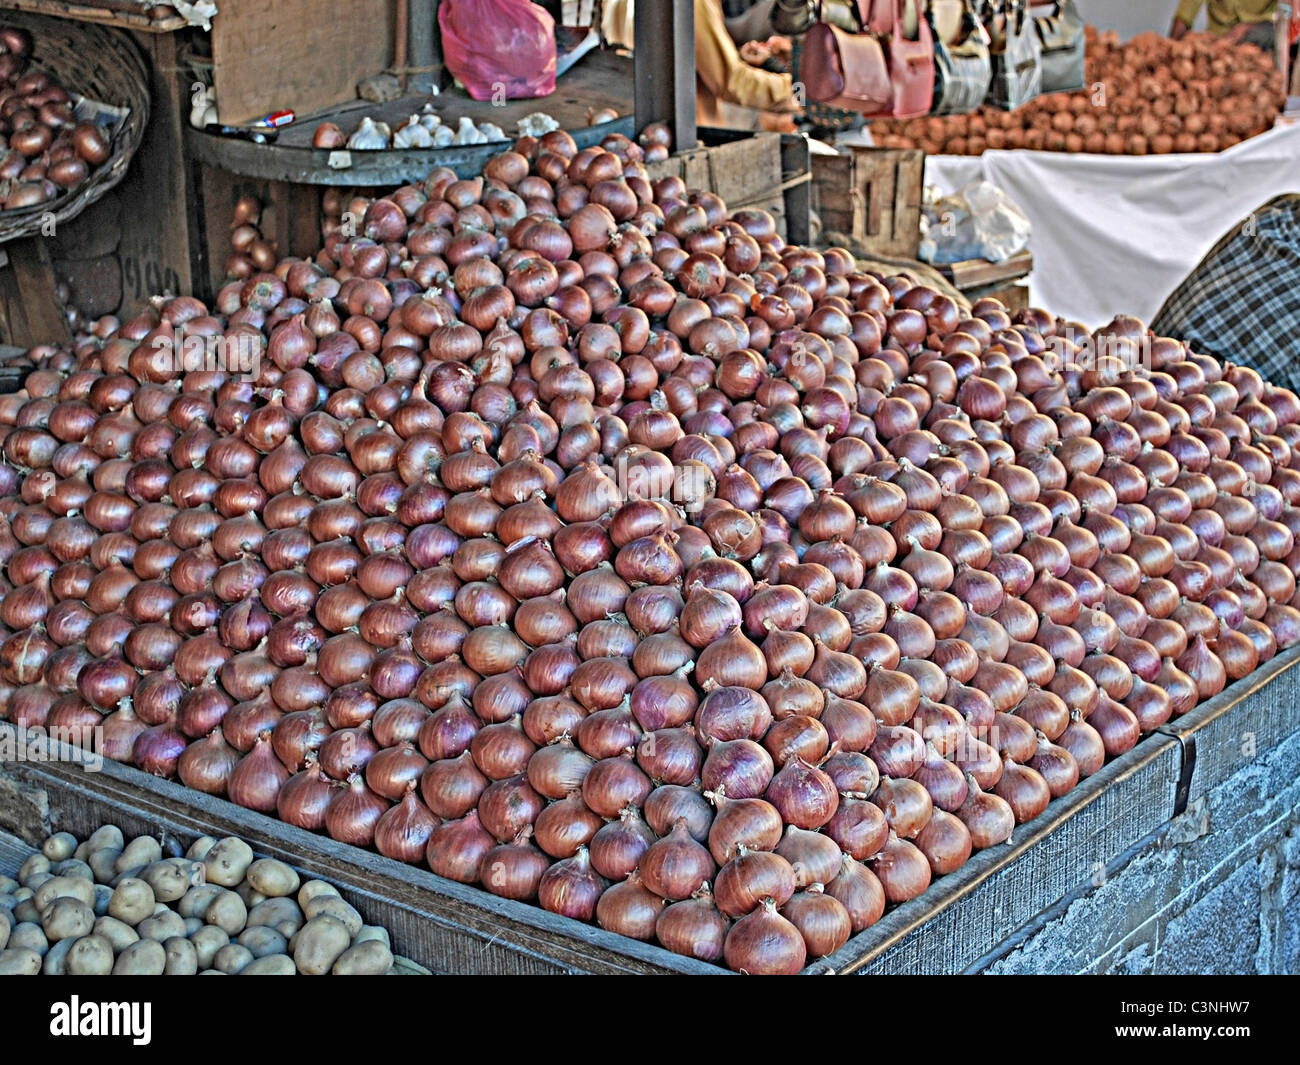 Onion marketplace drugs